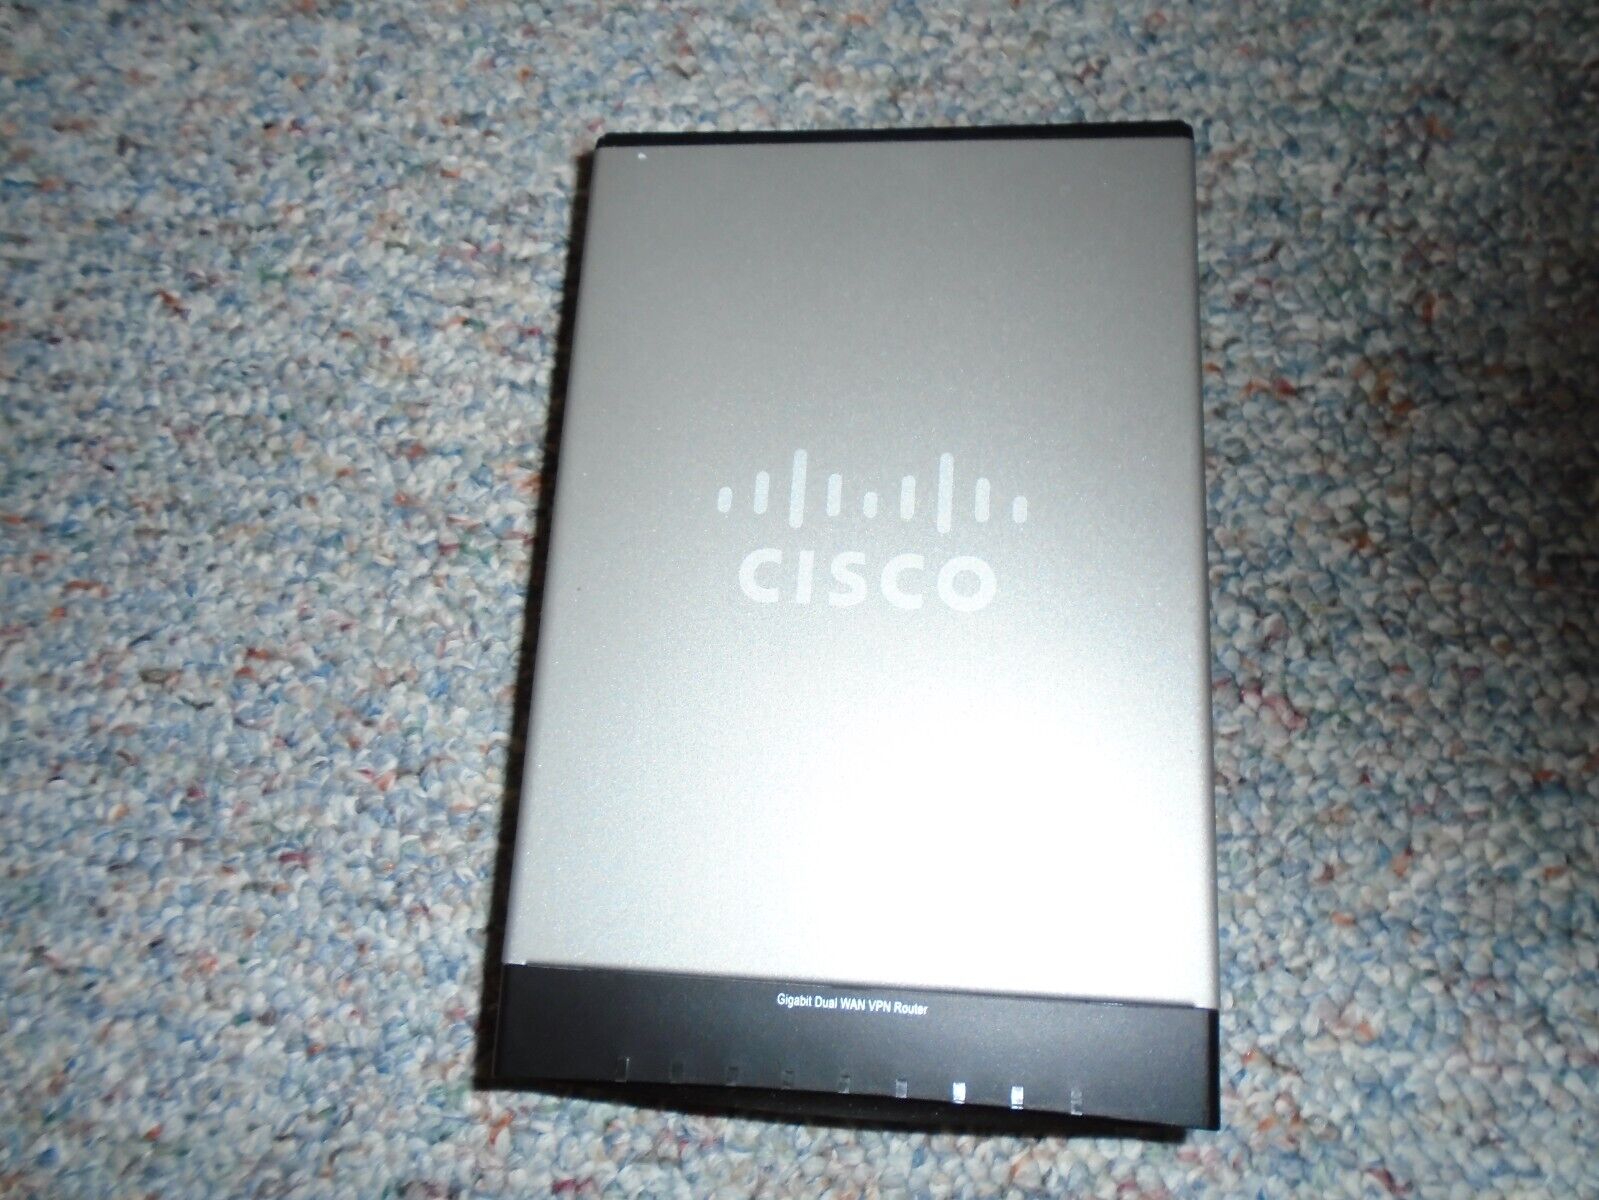 Cisco RV042G Small Business WAN VPN Router